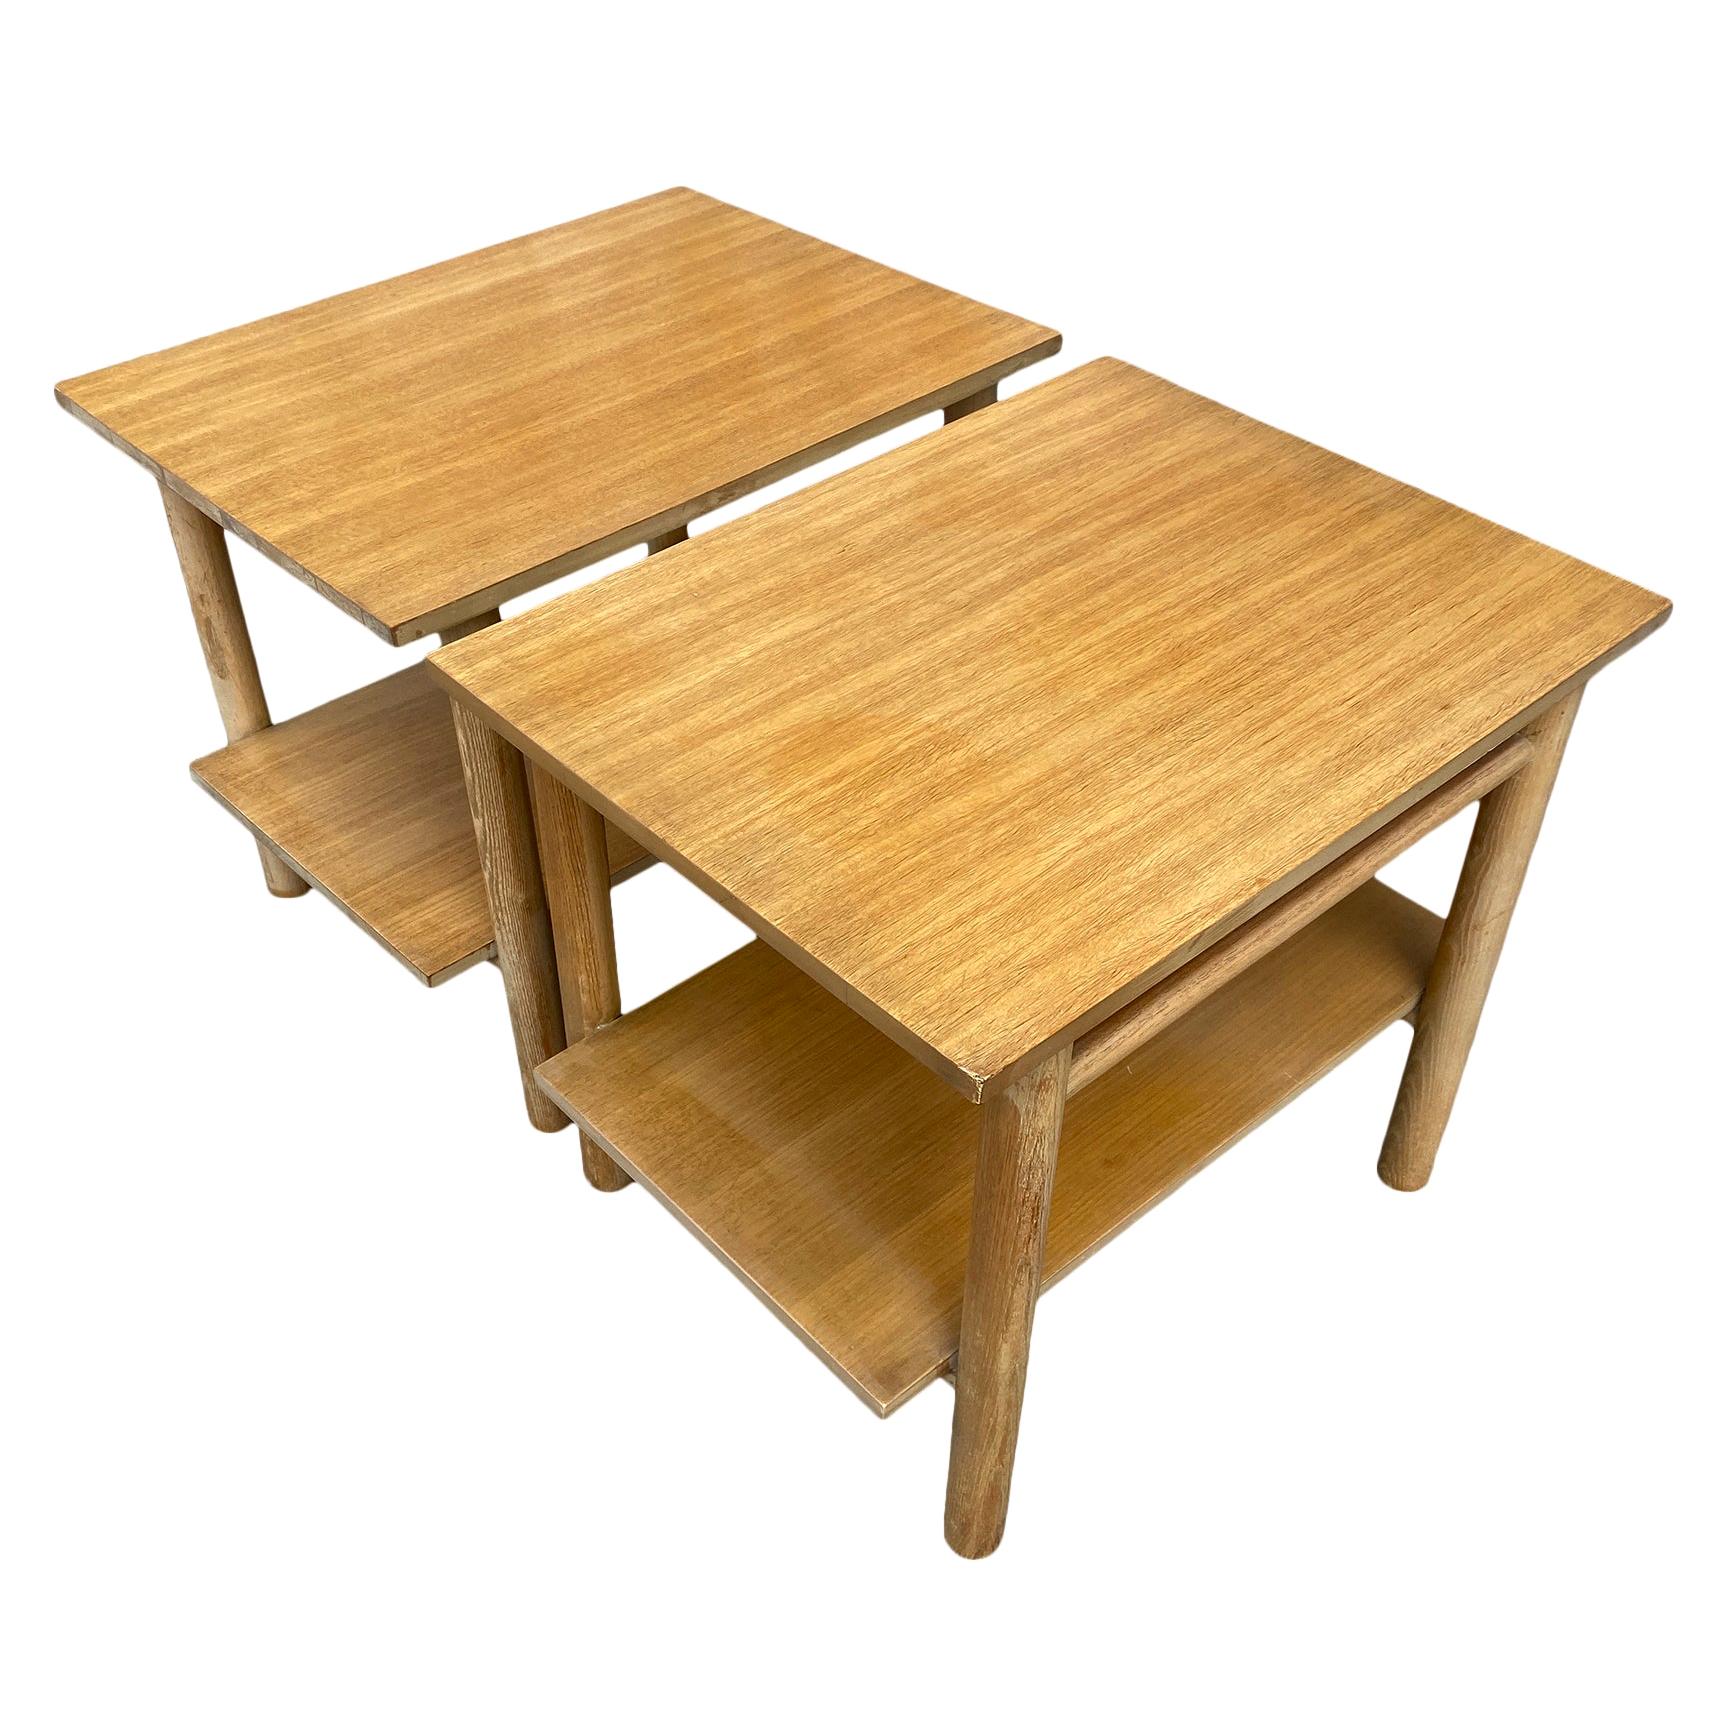 '2' Mid-Century Modern Simple White oak End Side Bedside Tables Nightstands